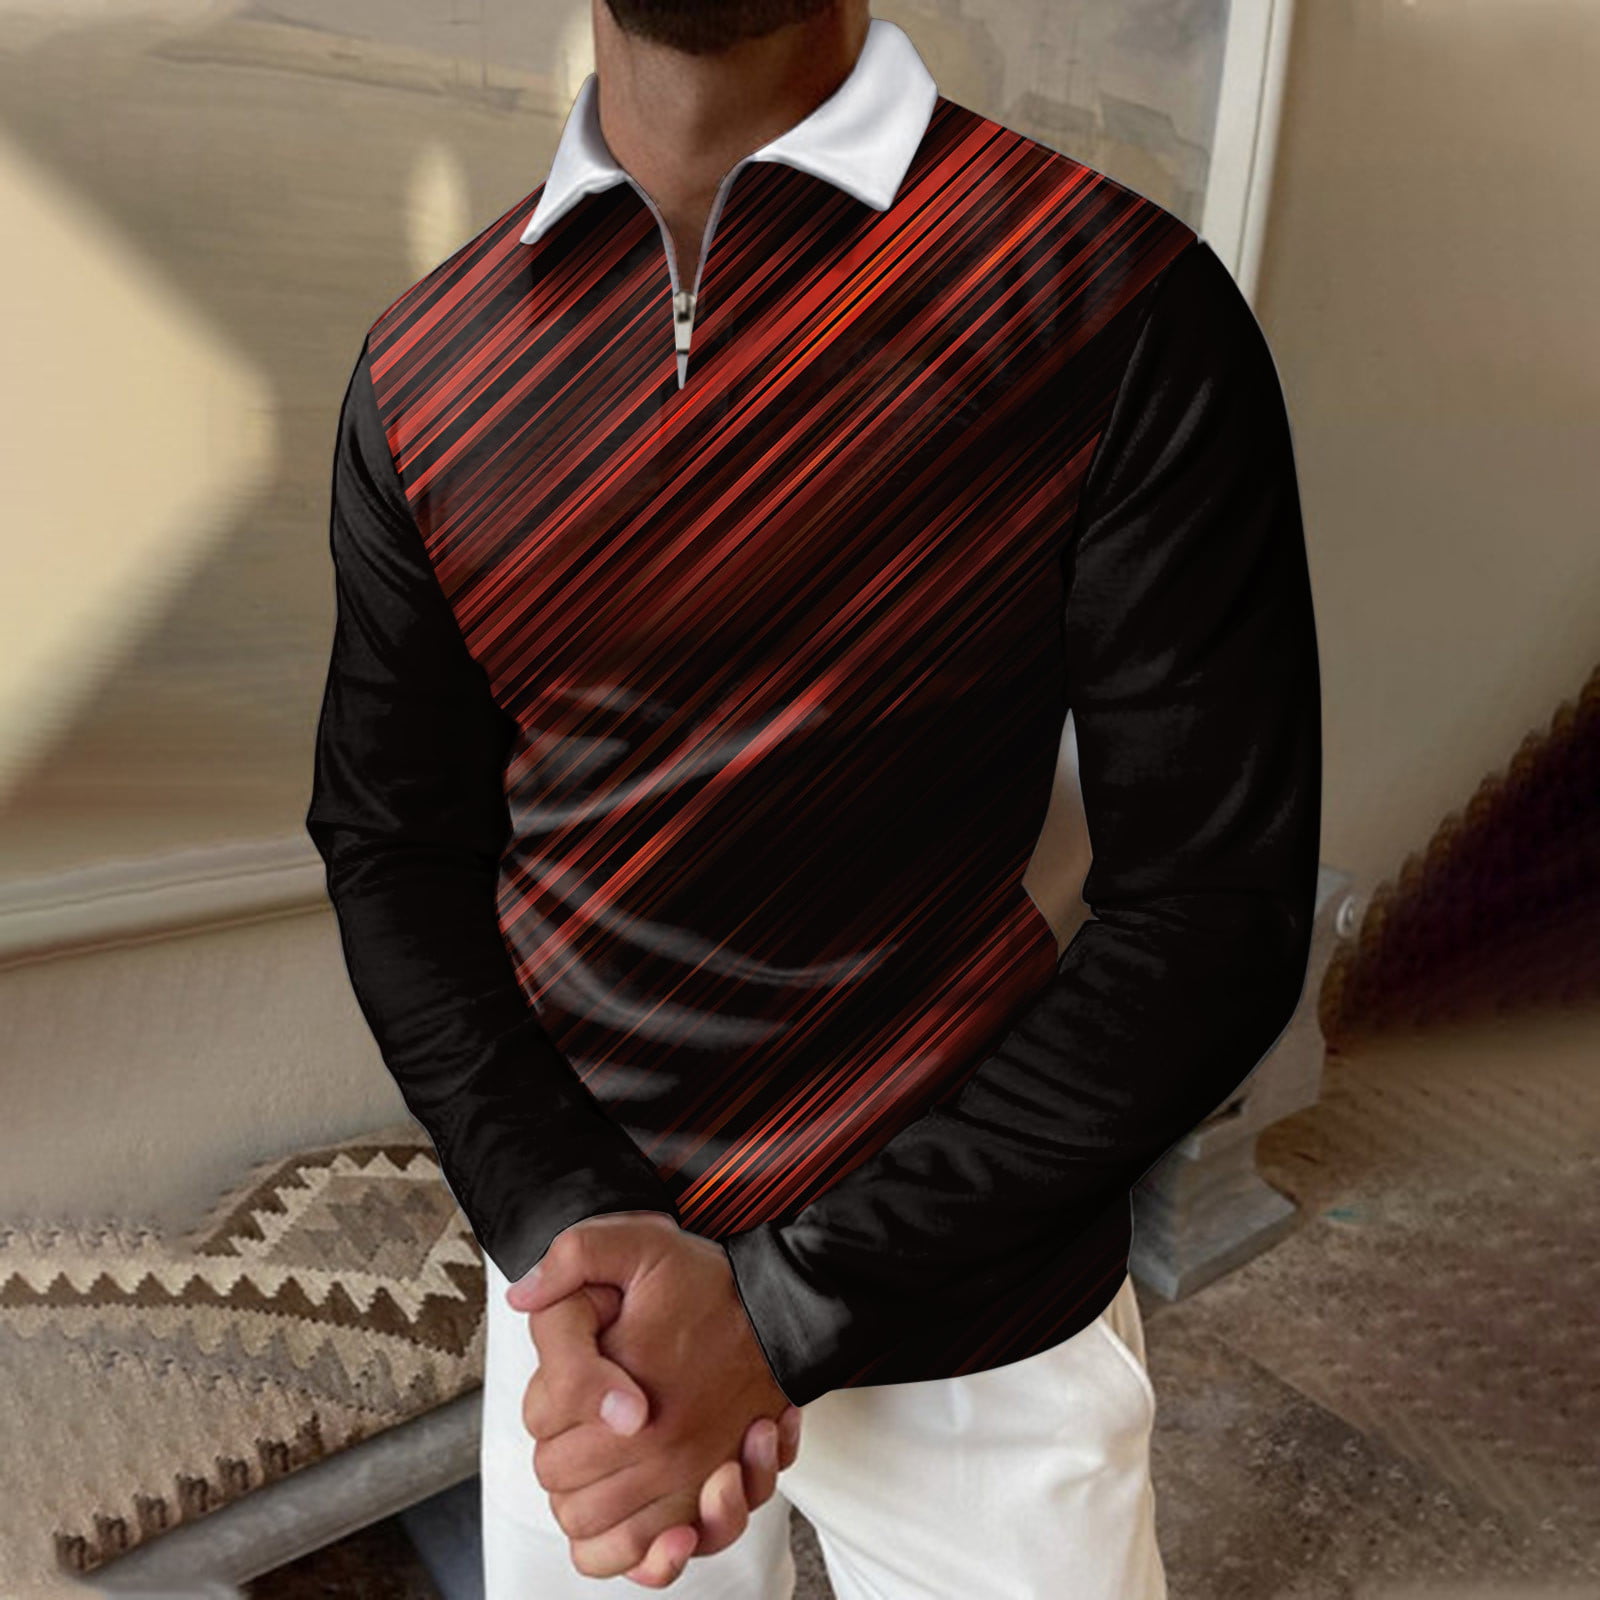 Louis Philippe Golf Blue Short Sleeve Polo Shirt Men Size L Regular Fi -  beyond exchange